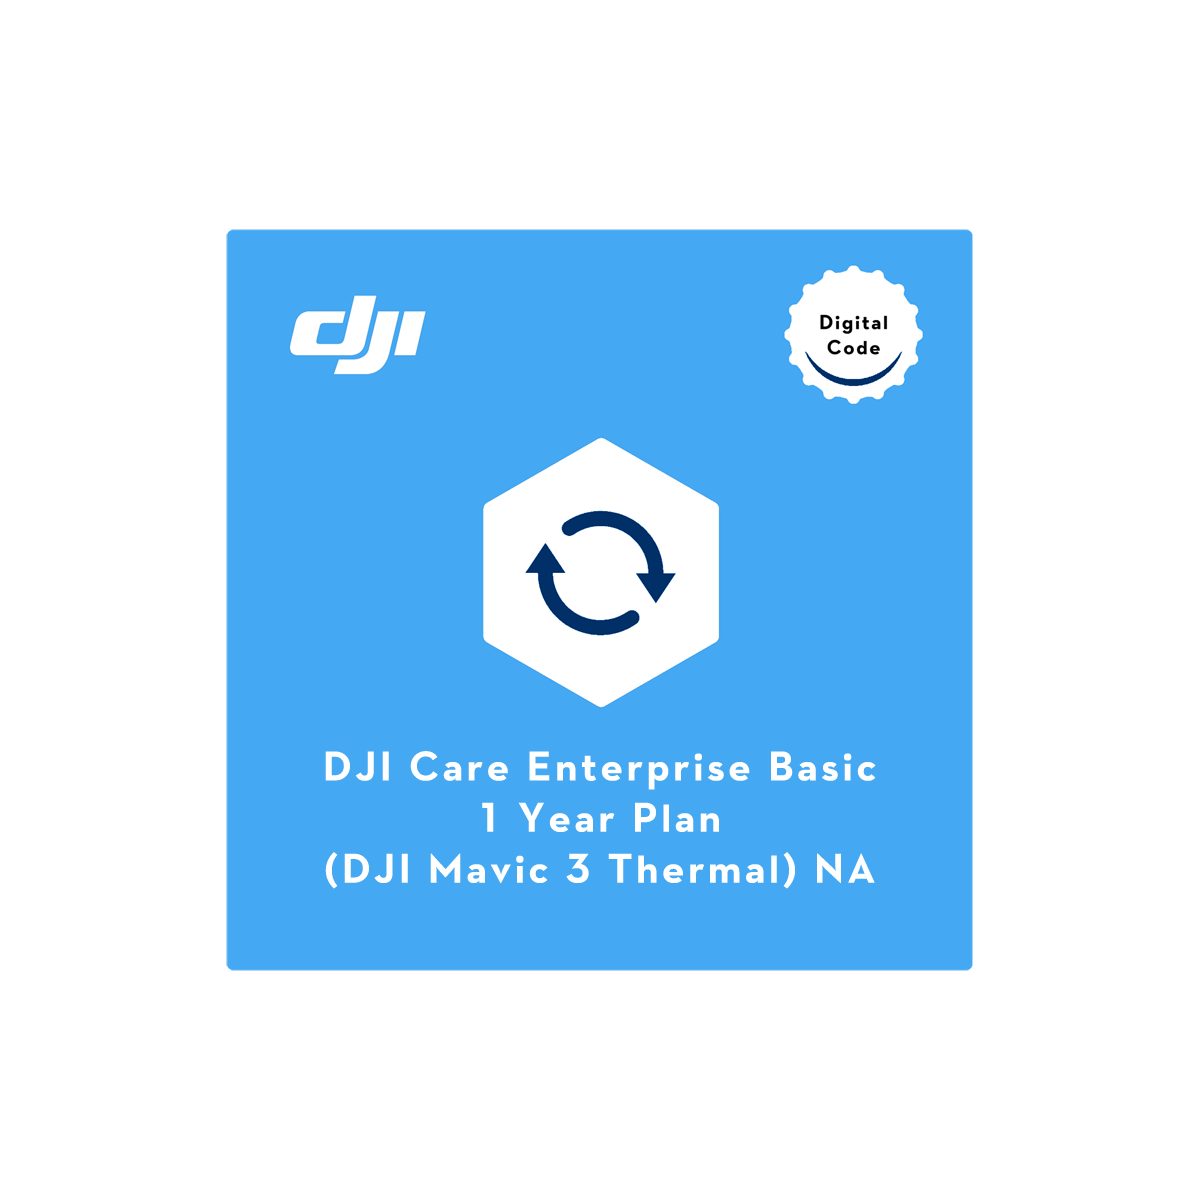 DJI Care Enterprise Basic (Mavic 3 Thermal) NA